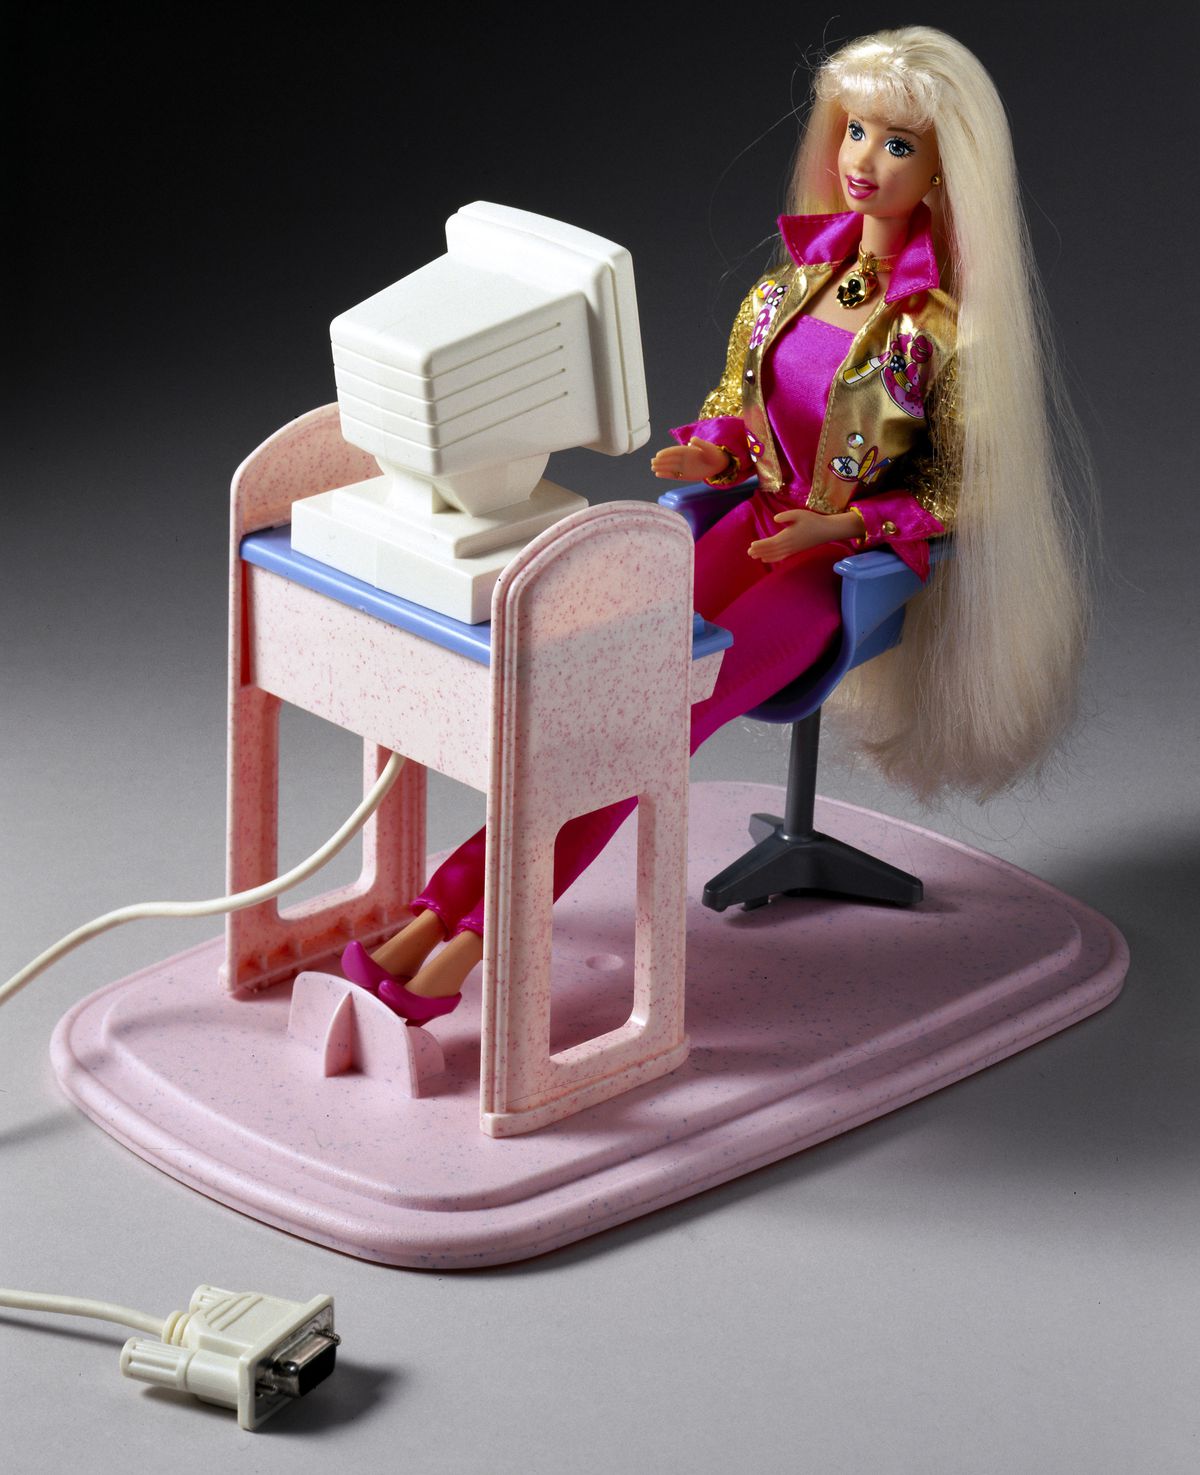 Talk With Me! Barbie doll, USA, 1997.